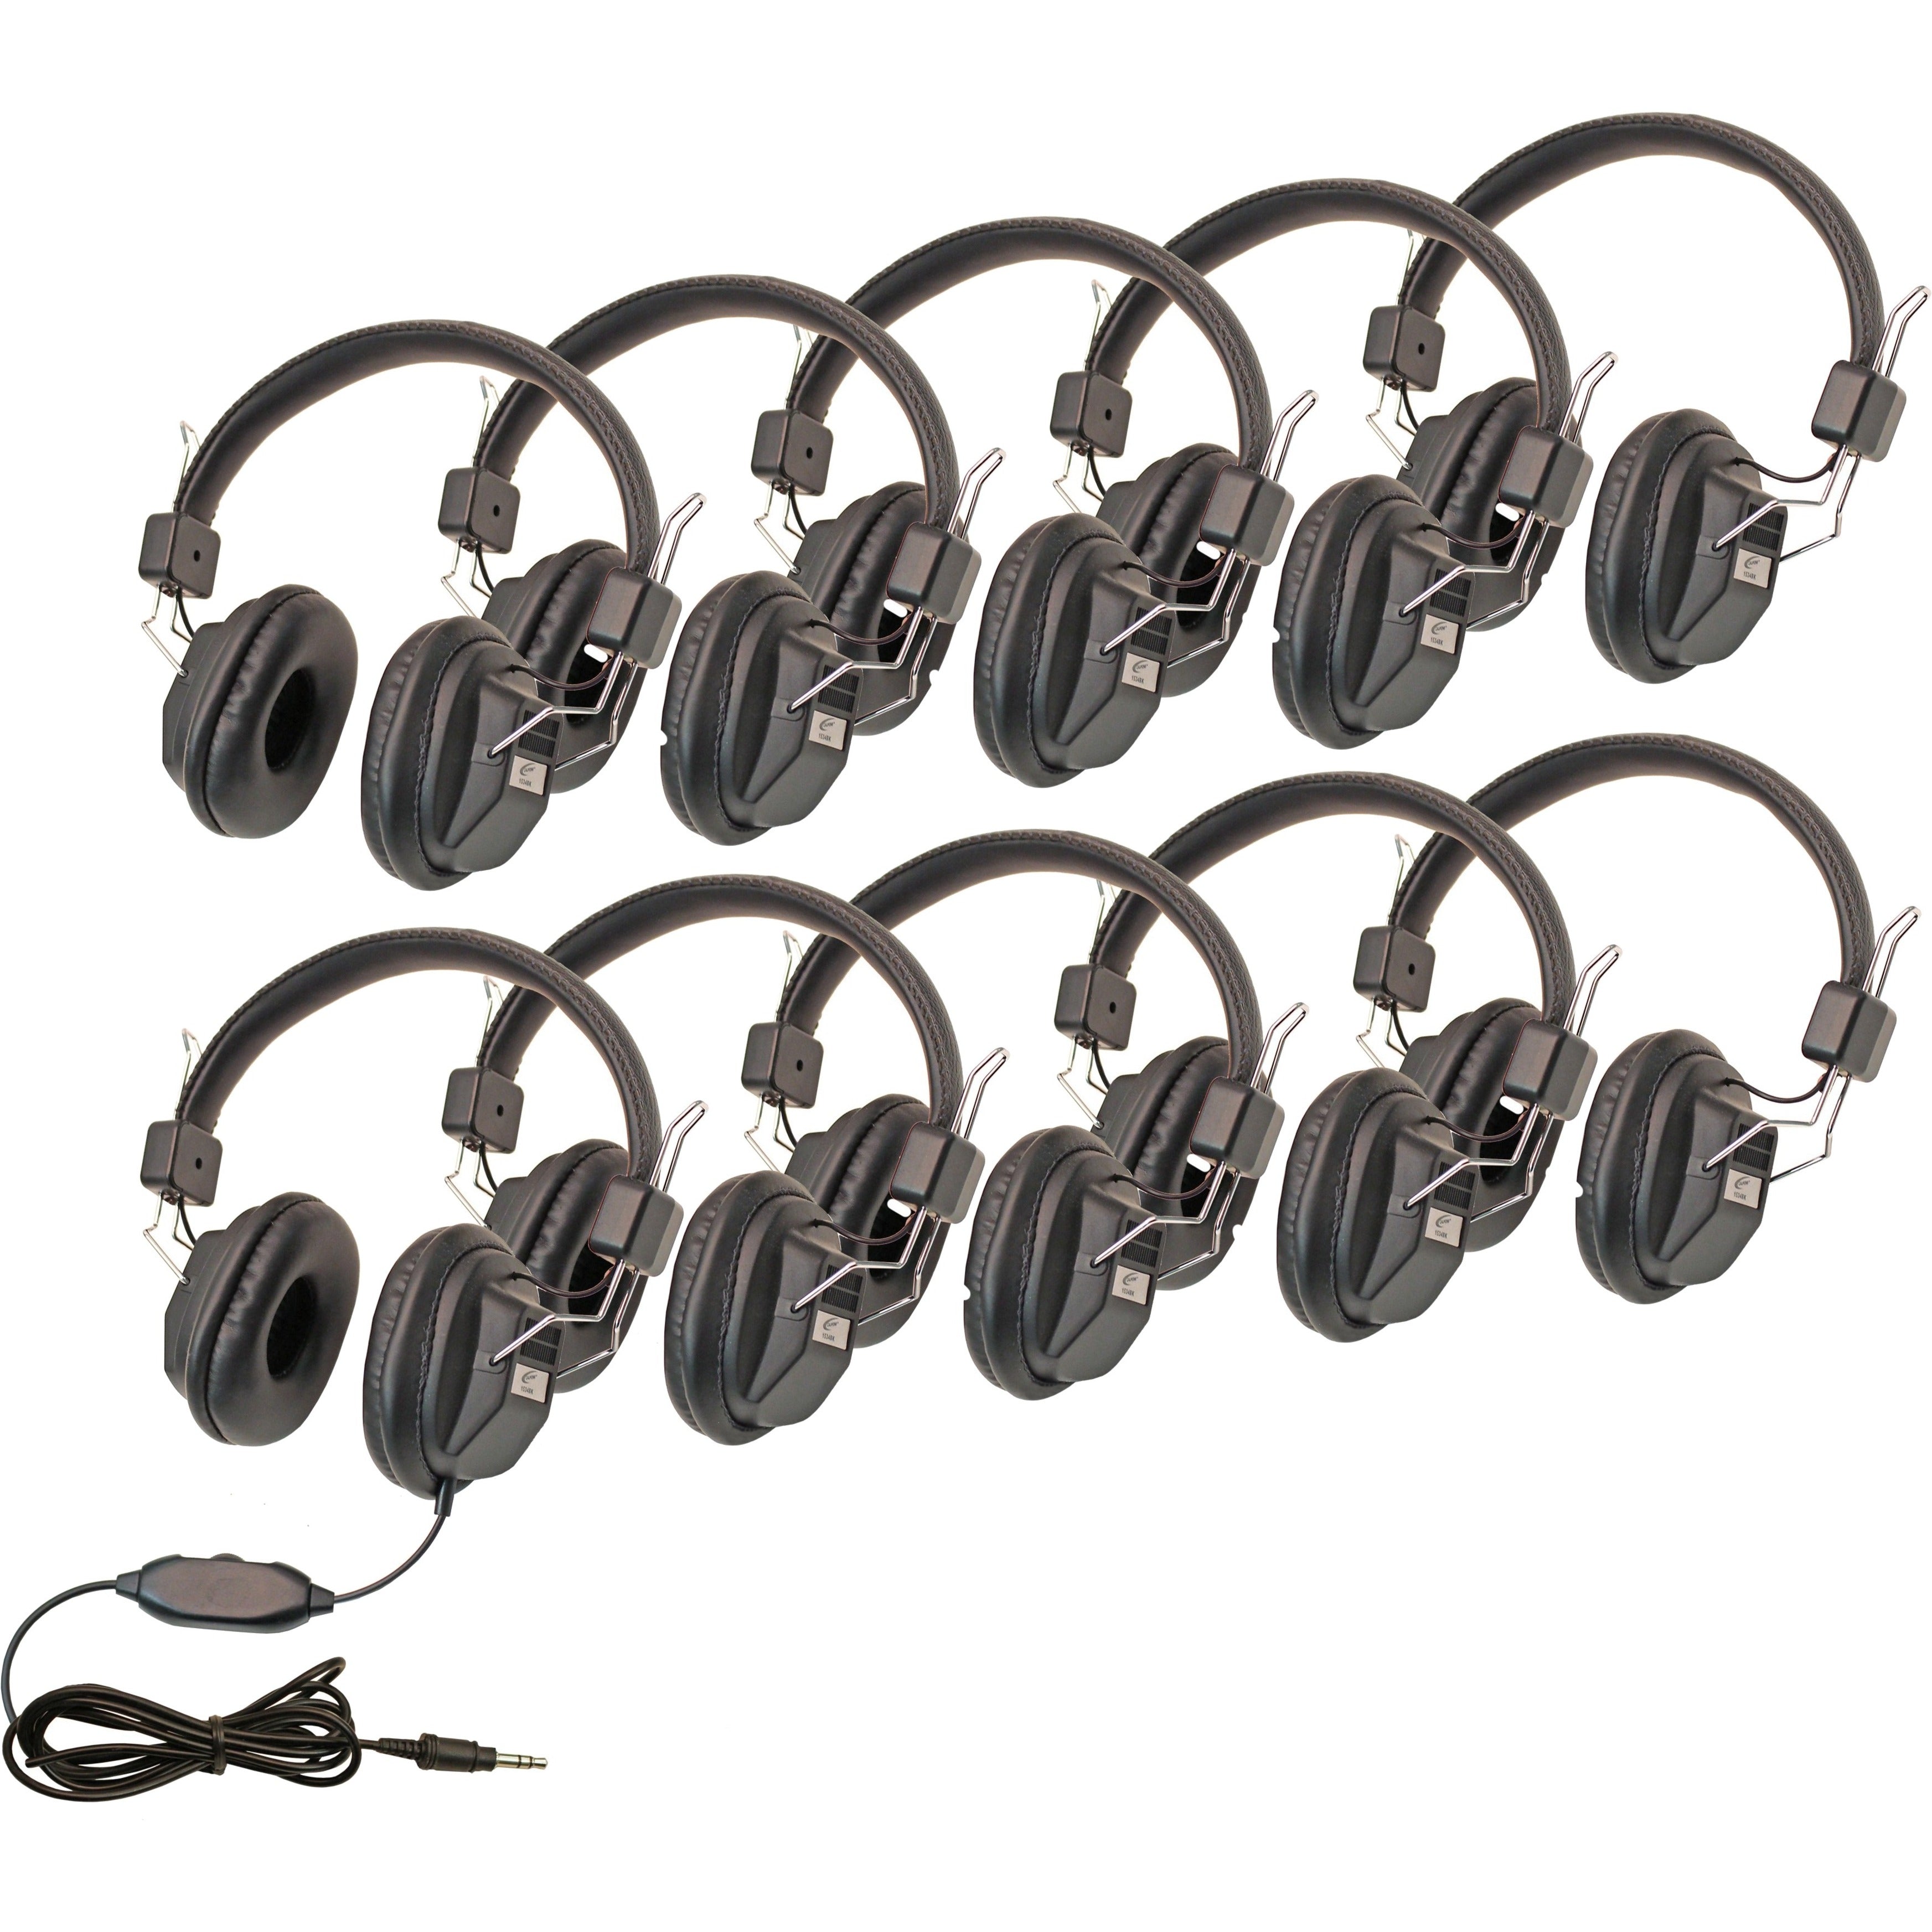 Califone 1534BK-10L 10 Pack Kids Headphone, Adjustable Headband, Comfortable, Noise Reduction